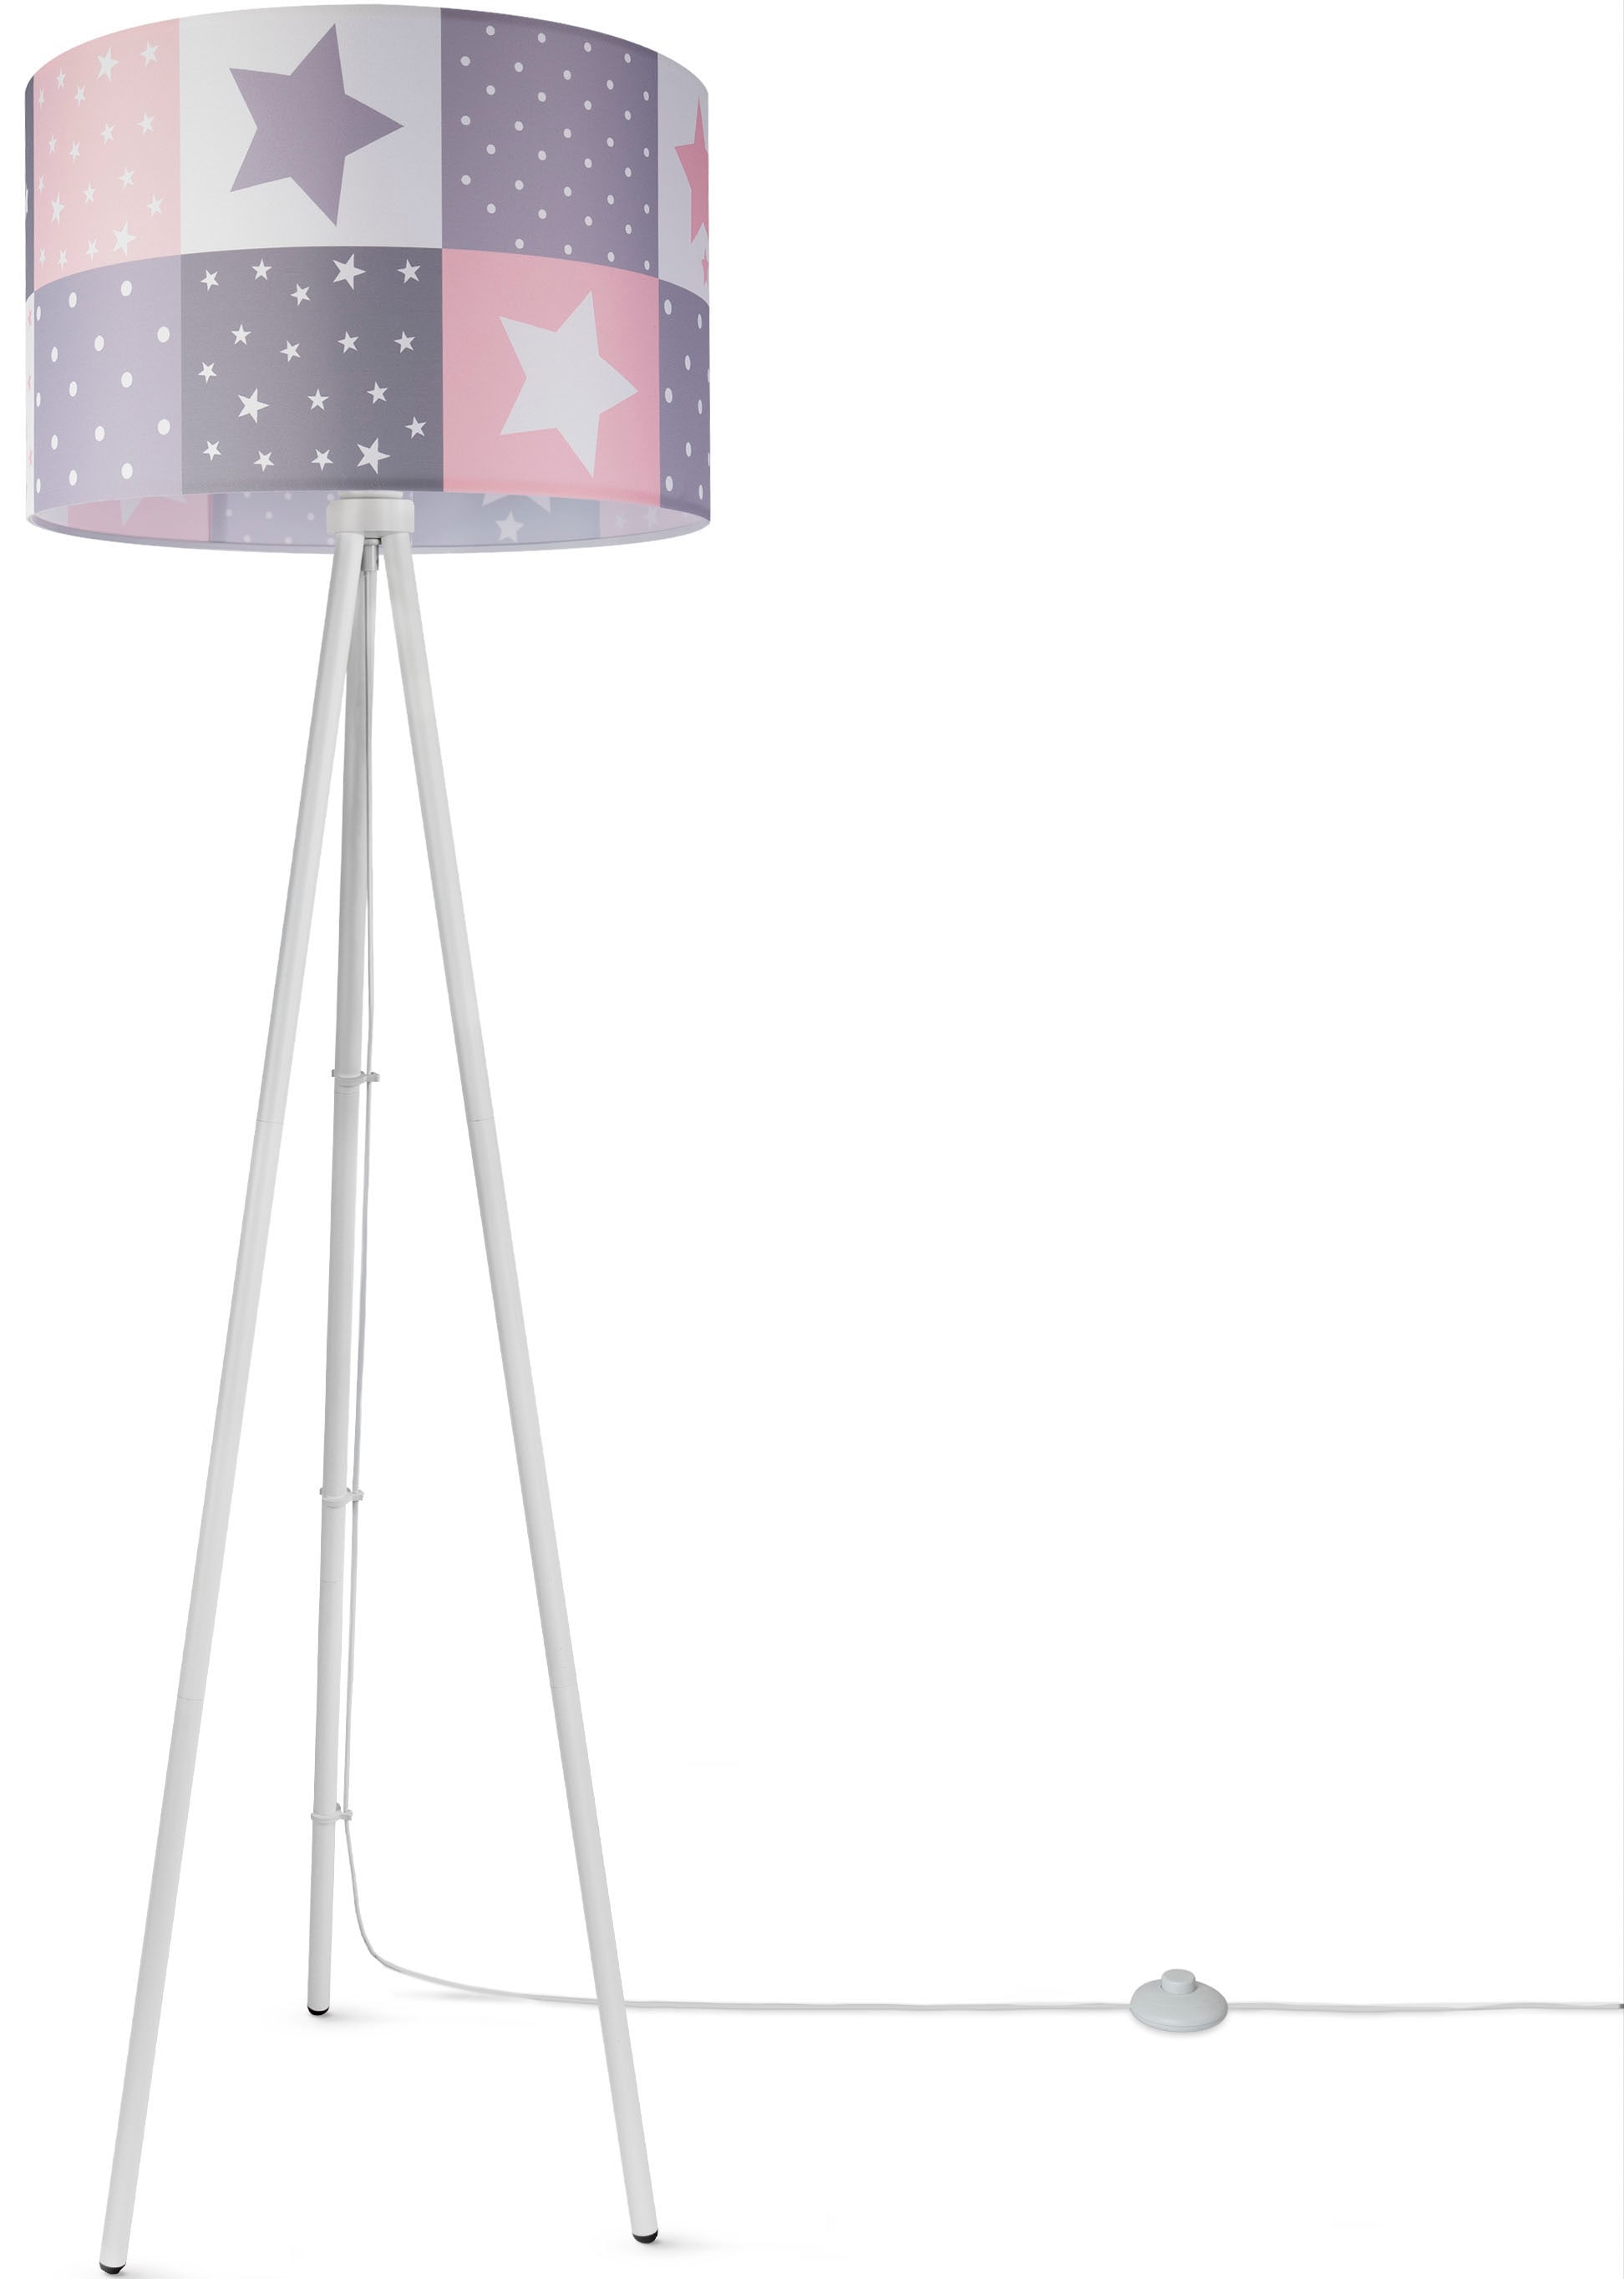 Paco Home Stehlampe »Trina Cosmo«, Kinderlampe LED Kinderzimmer Lampe  Sternen Motiv, Stehleuchte E27 online kaufen